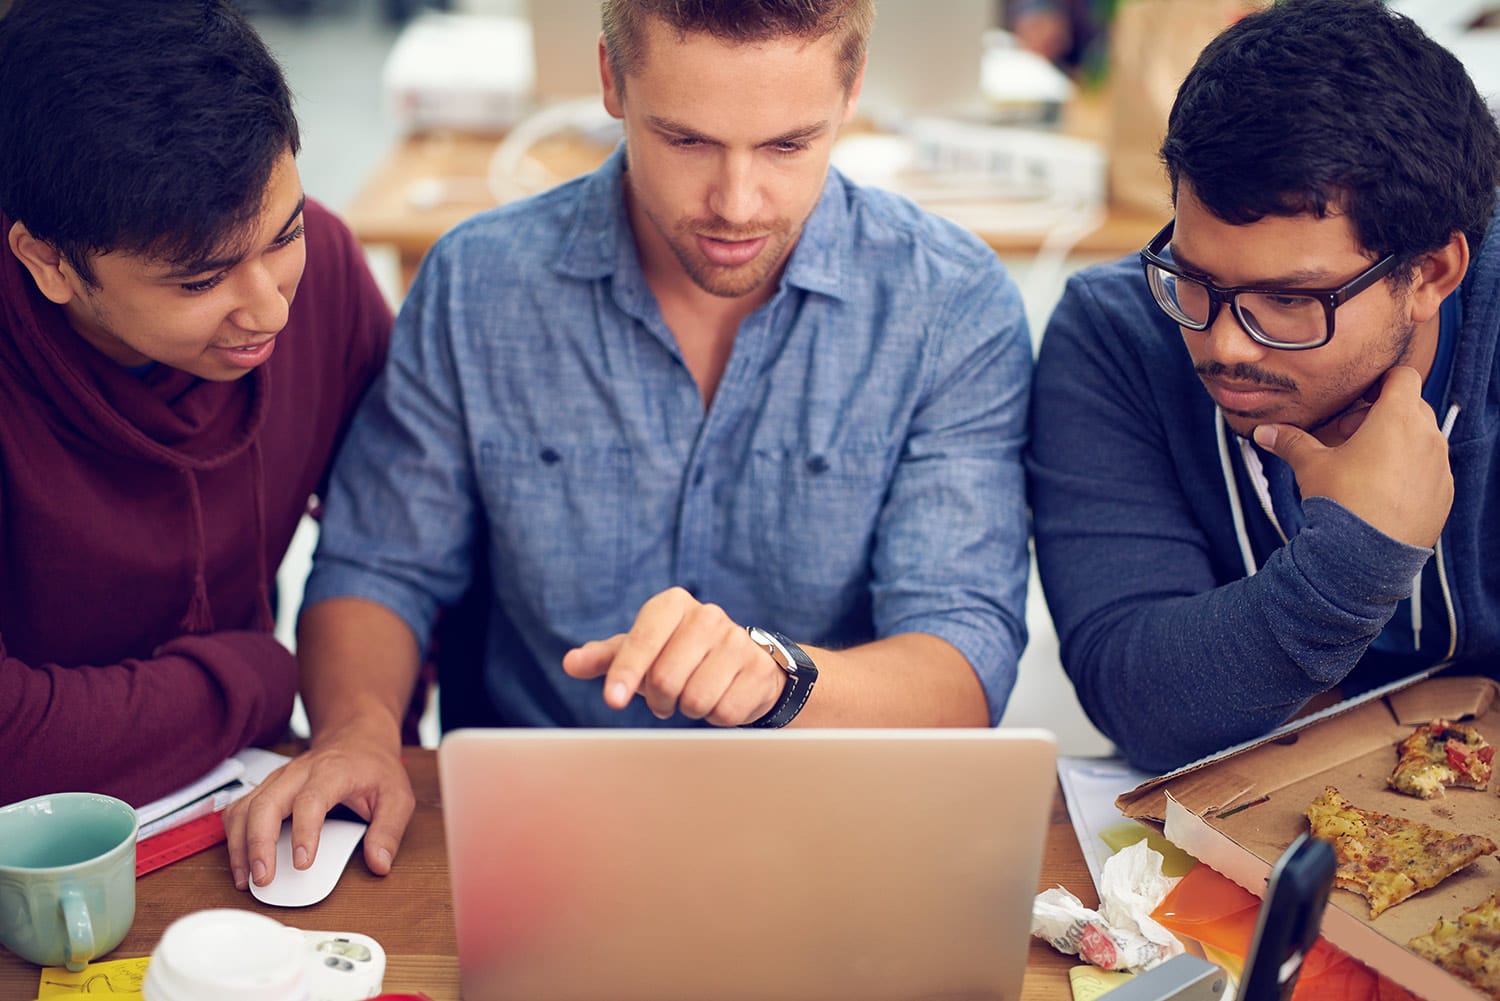 Three young men analyzing data on laptop